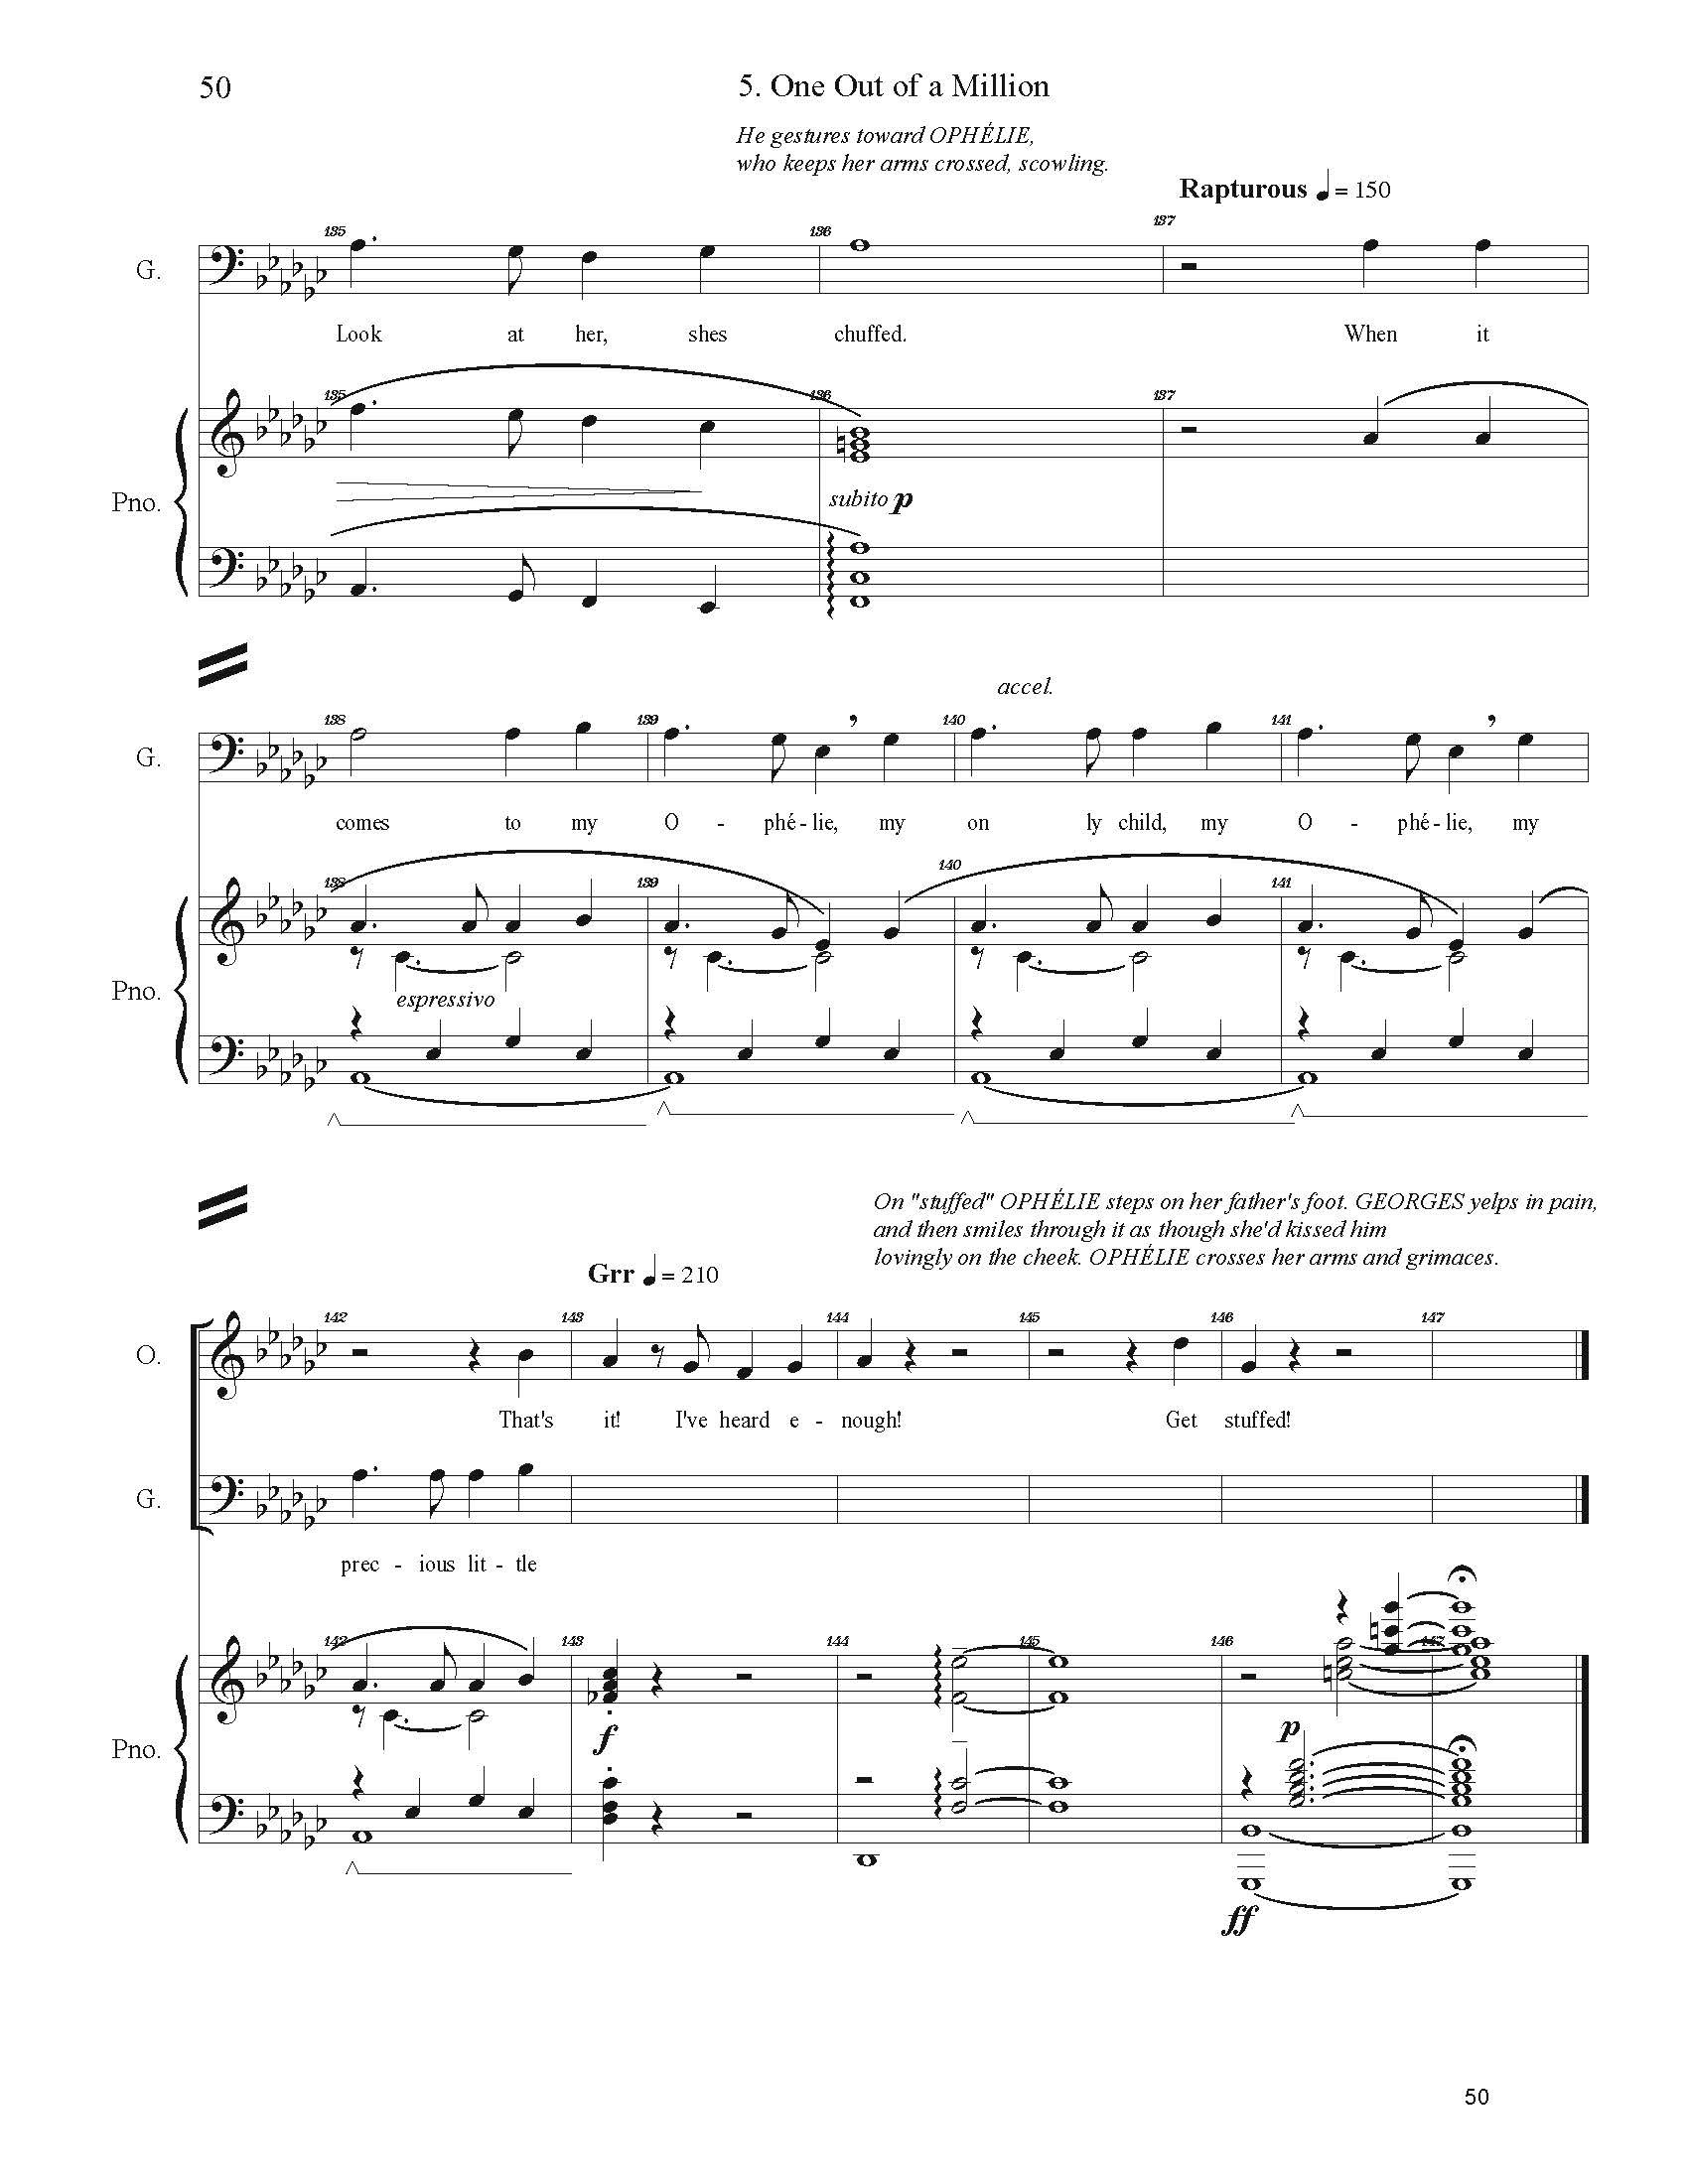 FULL PIANO VOCAL SCORE DRAFT 1 - Score_Page_050.jpg